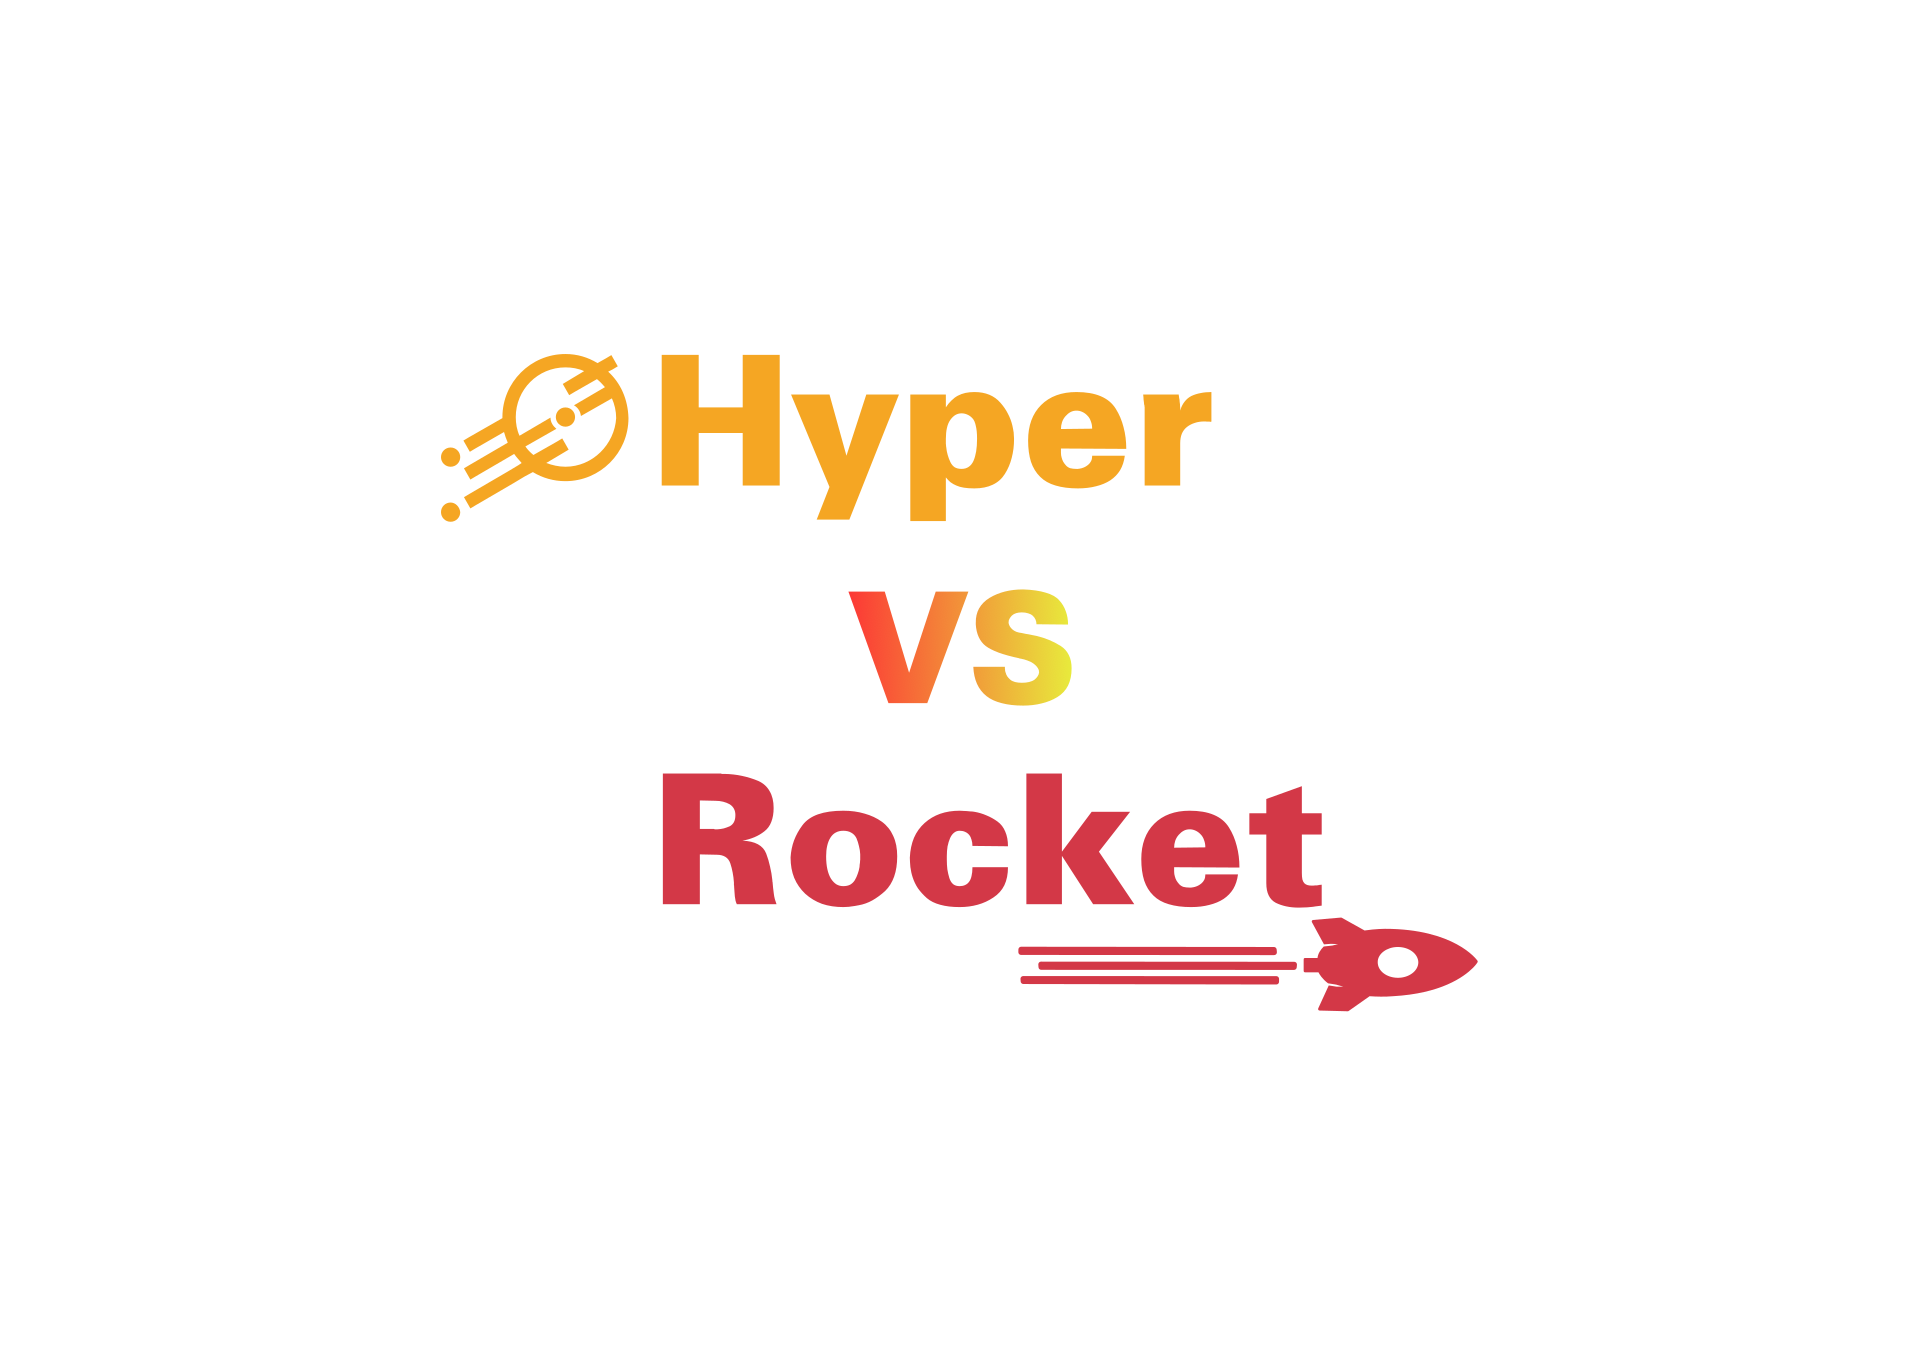 Hyper vs Rocket - Low Level vs Batteries included